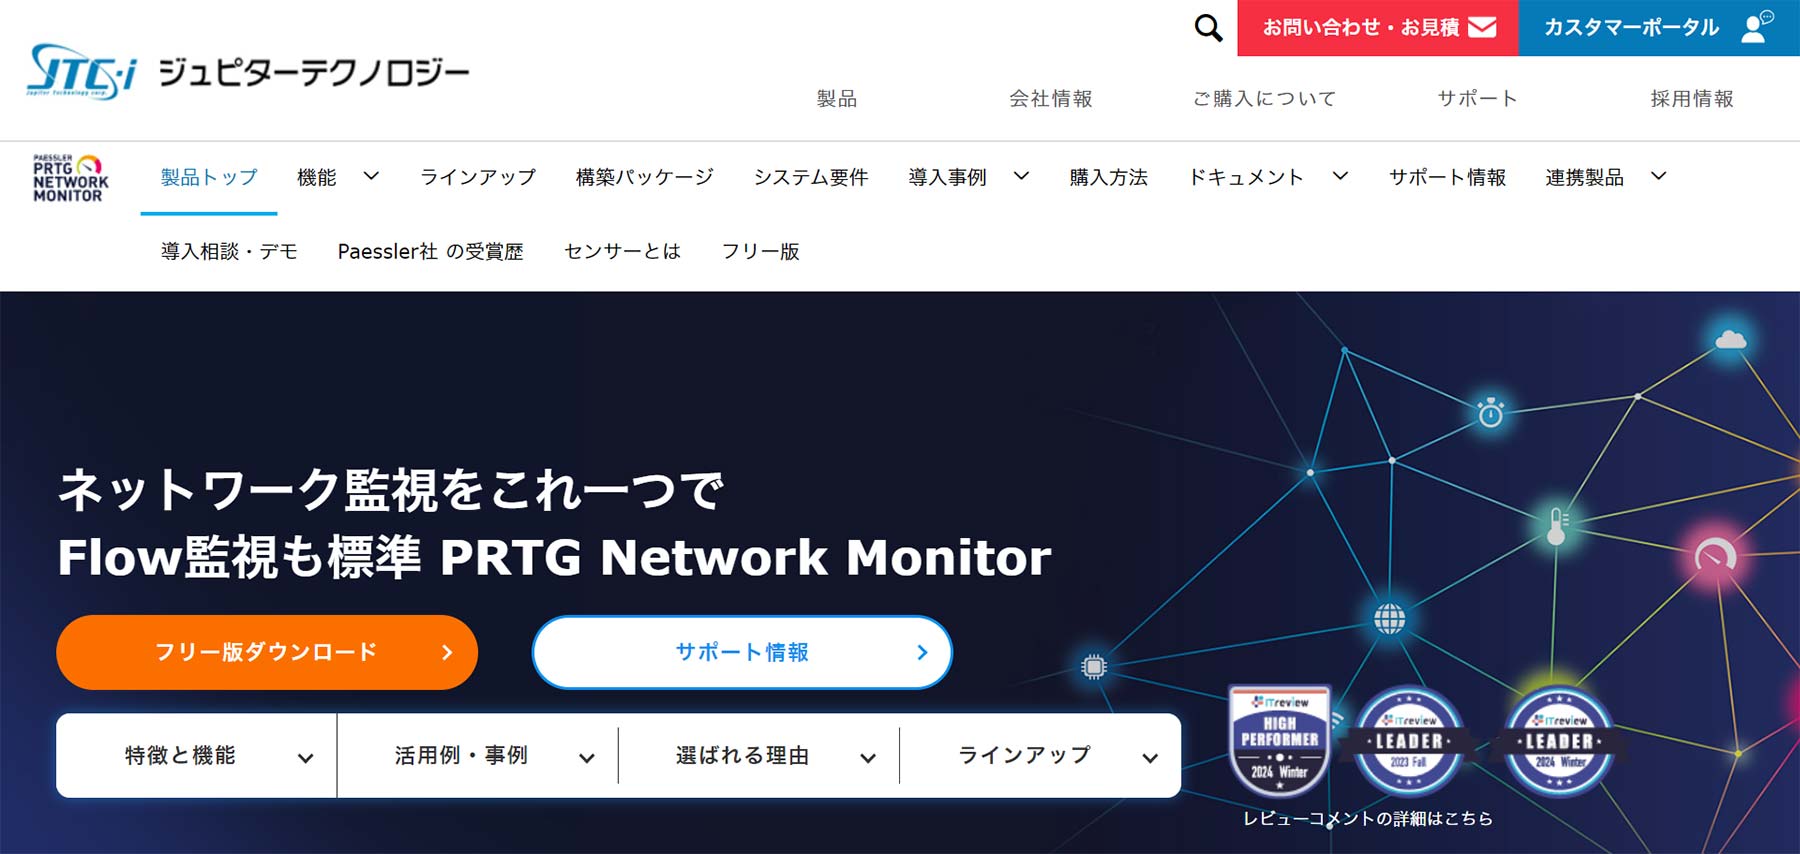 PRTG Network Monitor公式Webサイト